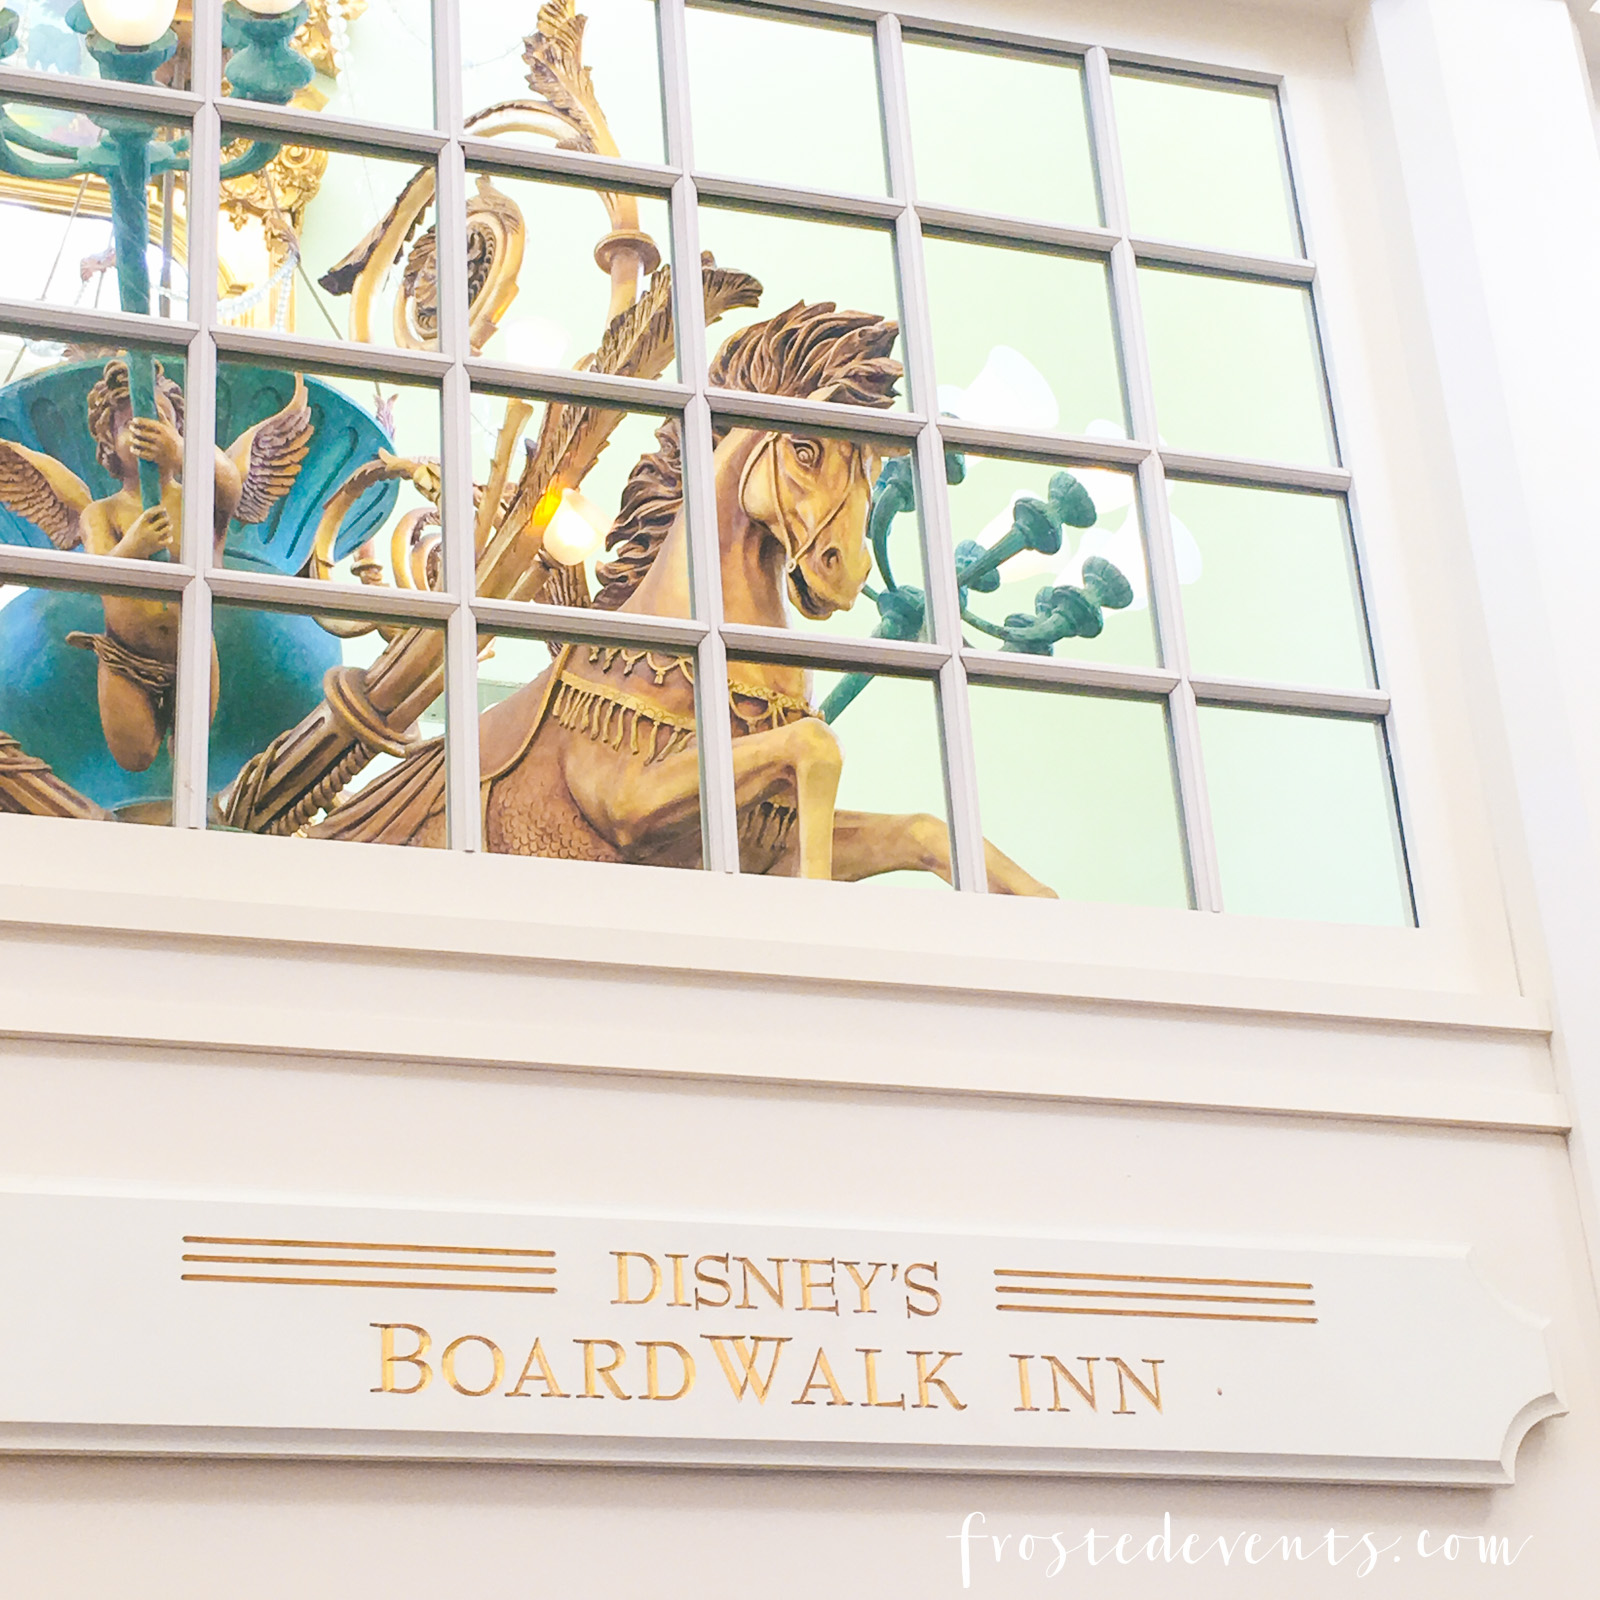 Disney Boardwalk Inn - Disney World Resorts - Disney Vacation planning via Misty Nelson family travel blogger @frostedevents 